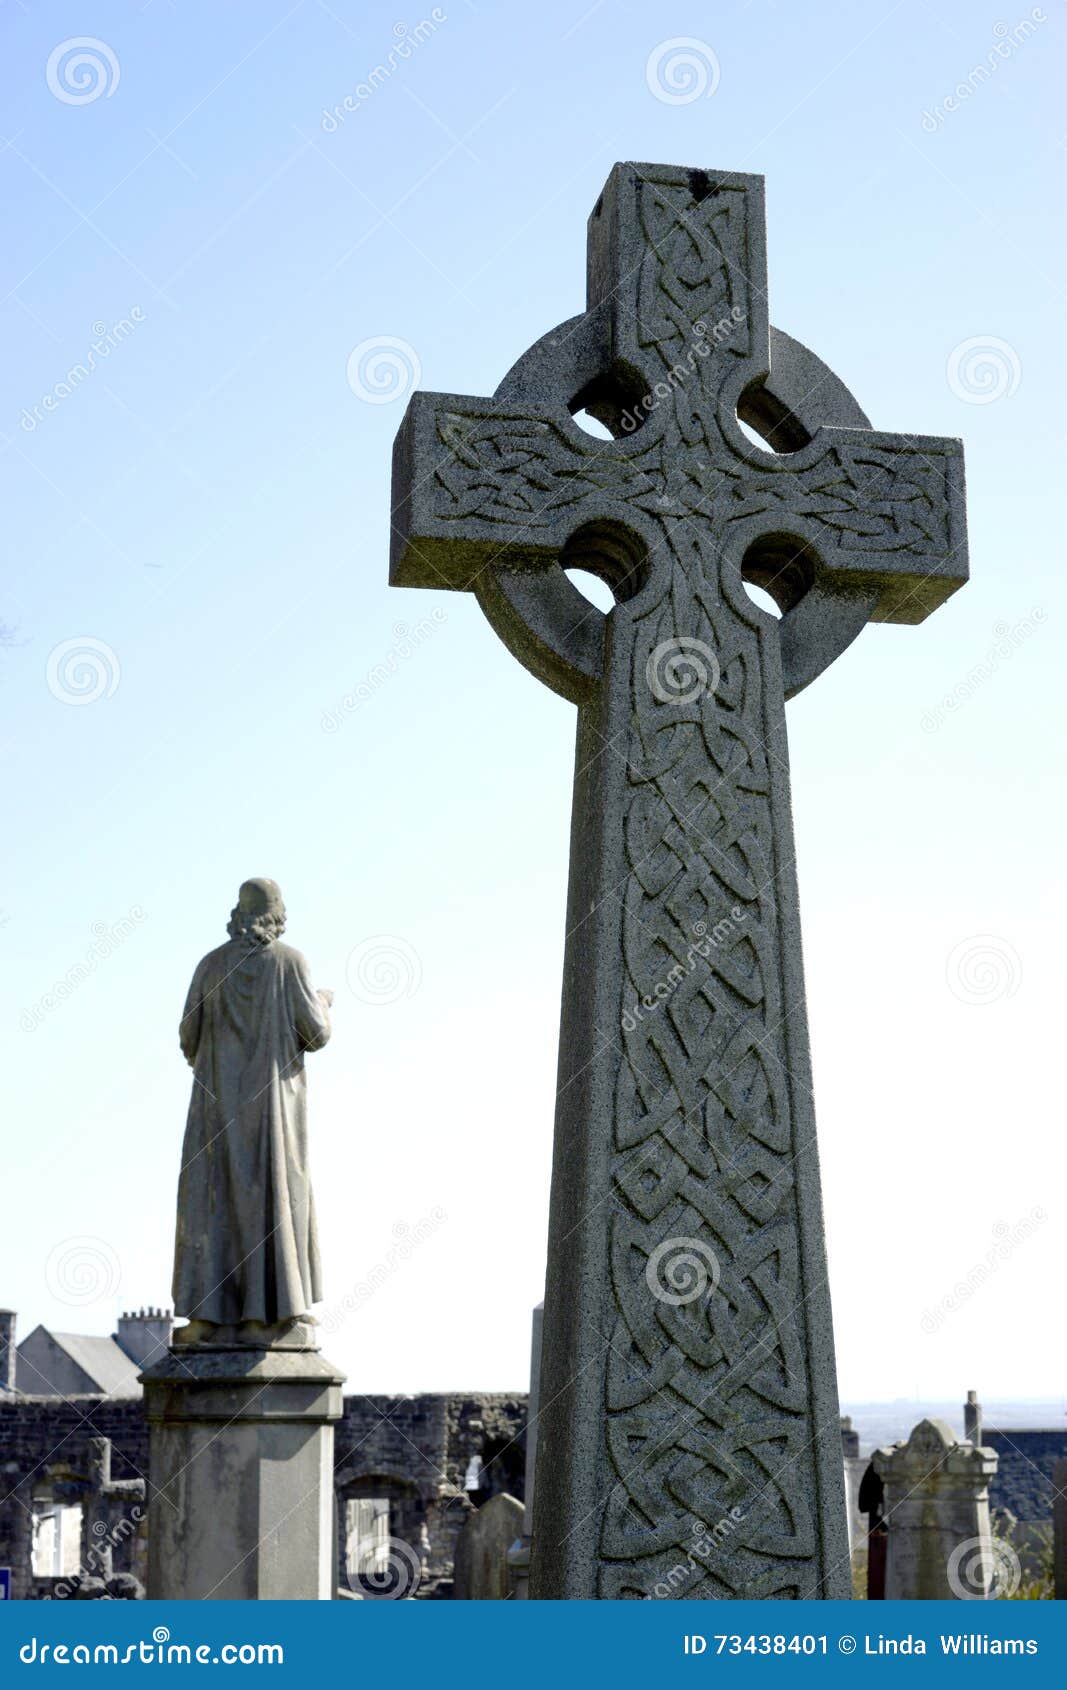 celtic cross and patron saint